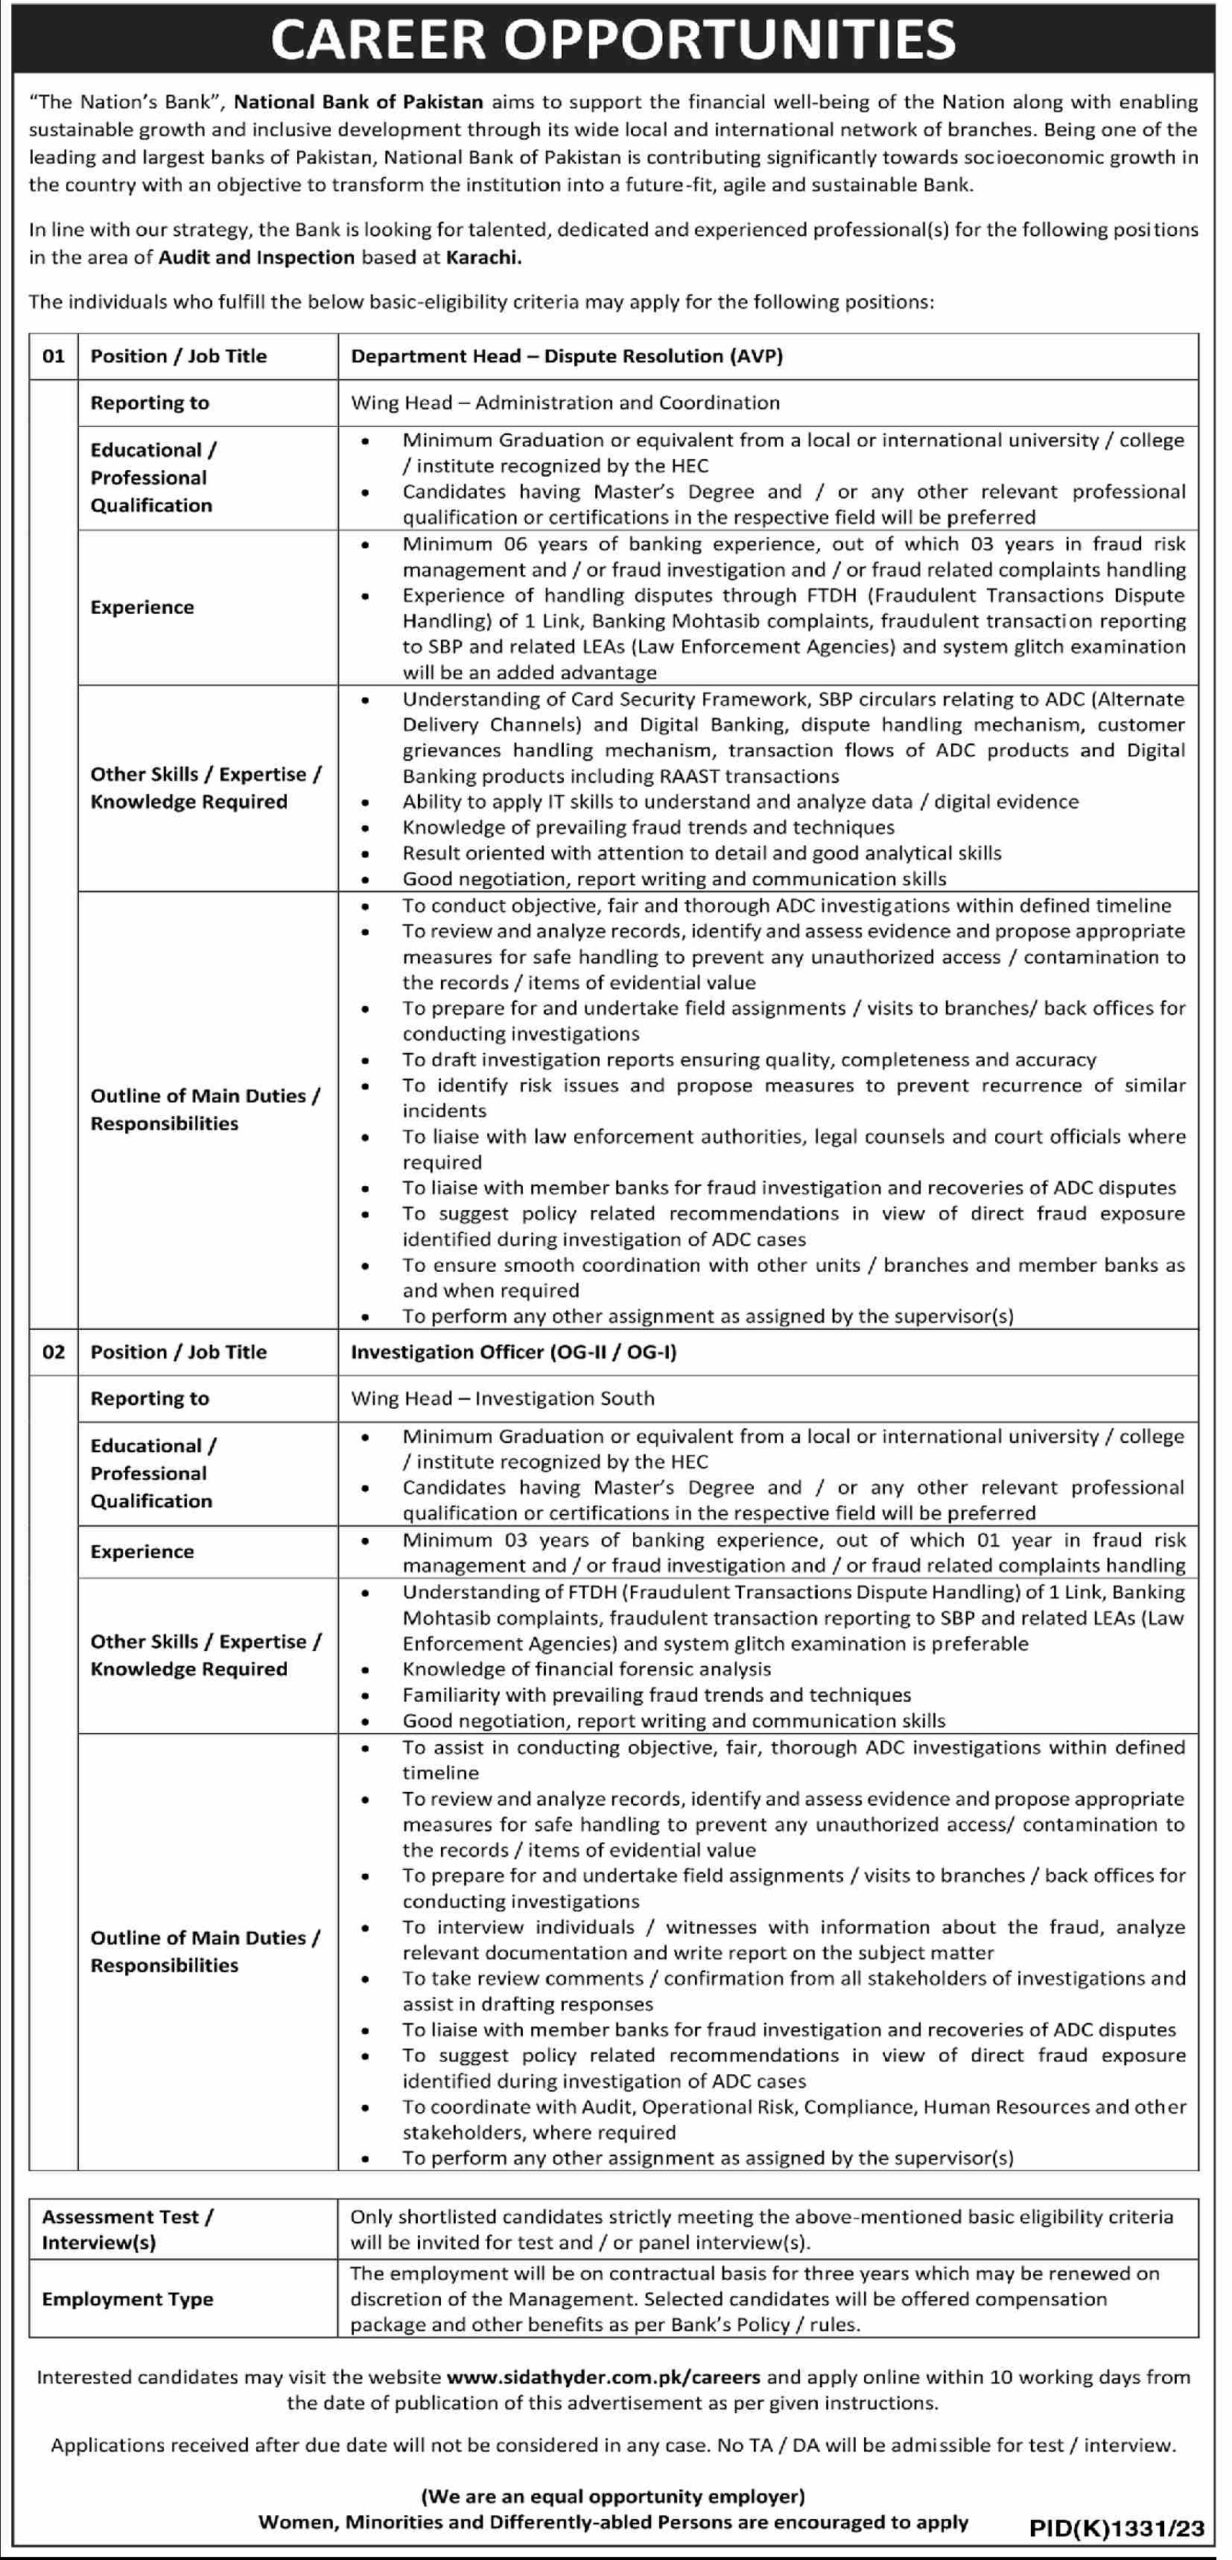 National Bank of Pakistan Jobs Audit and Inspection at Karachi Newspaper Ads